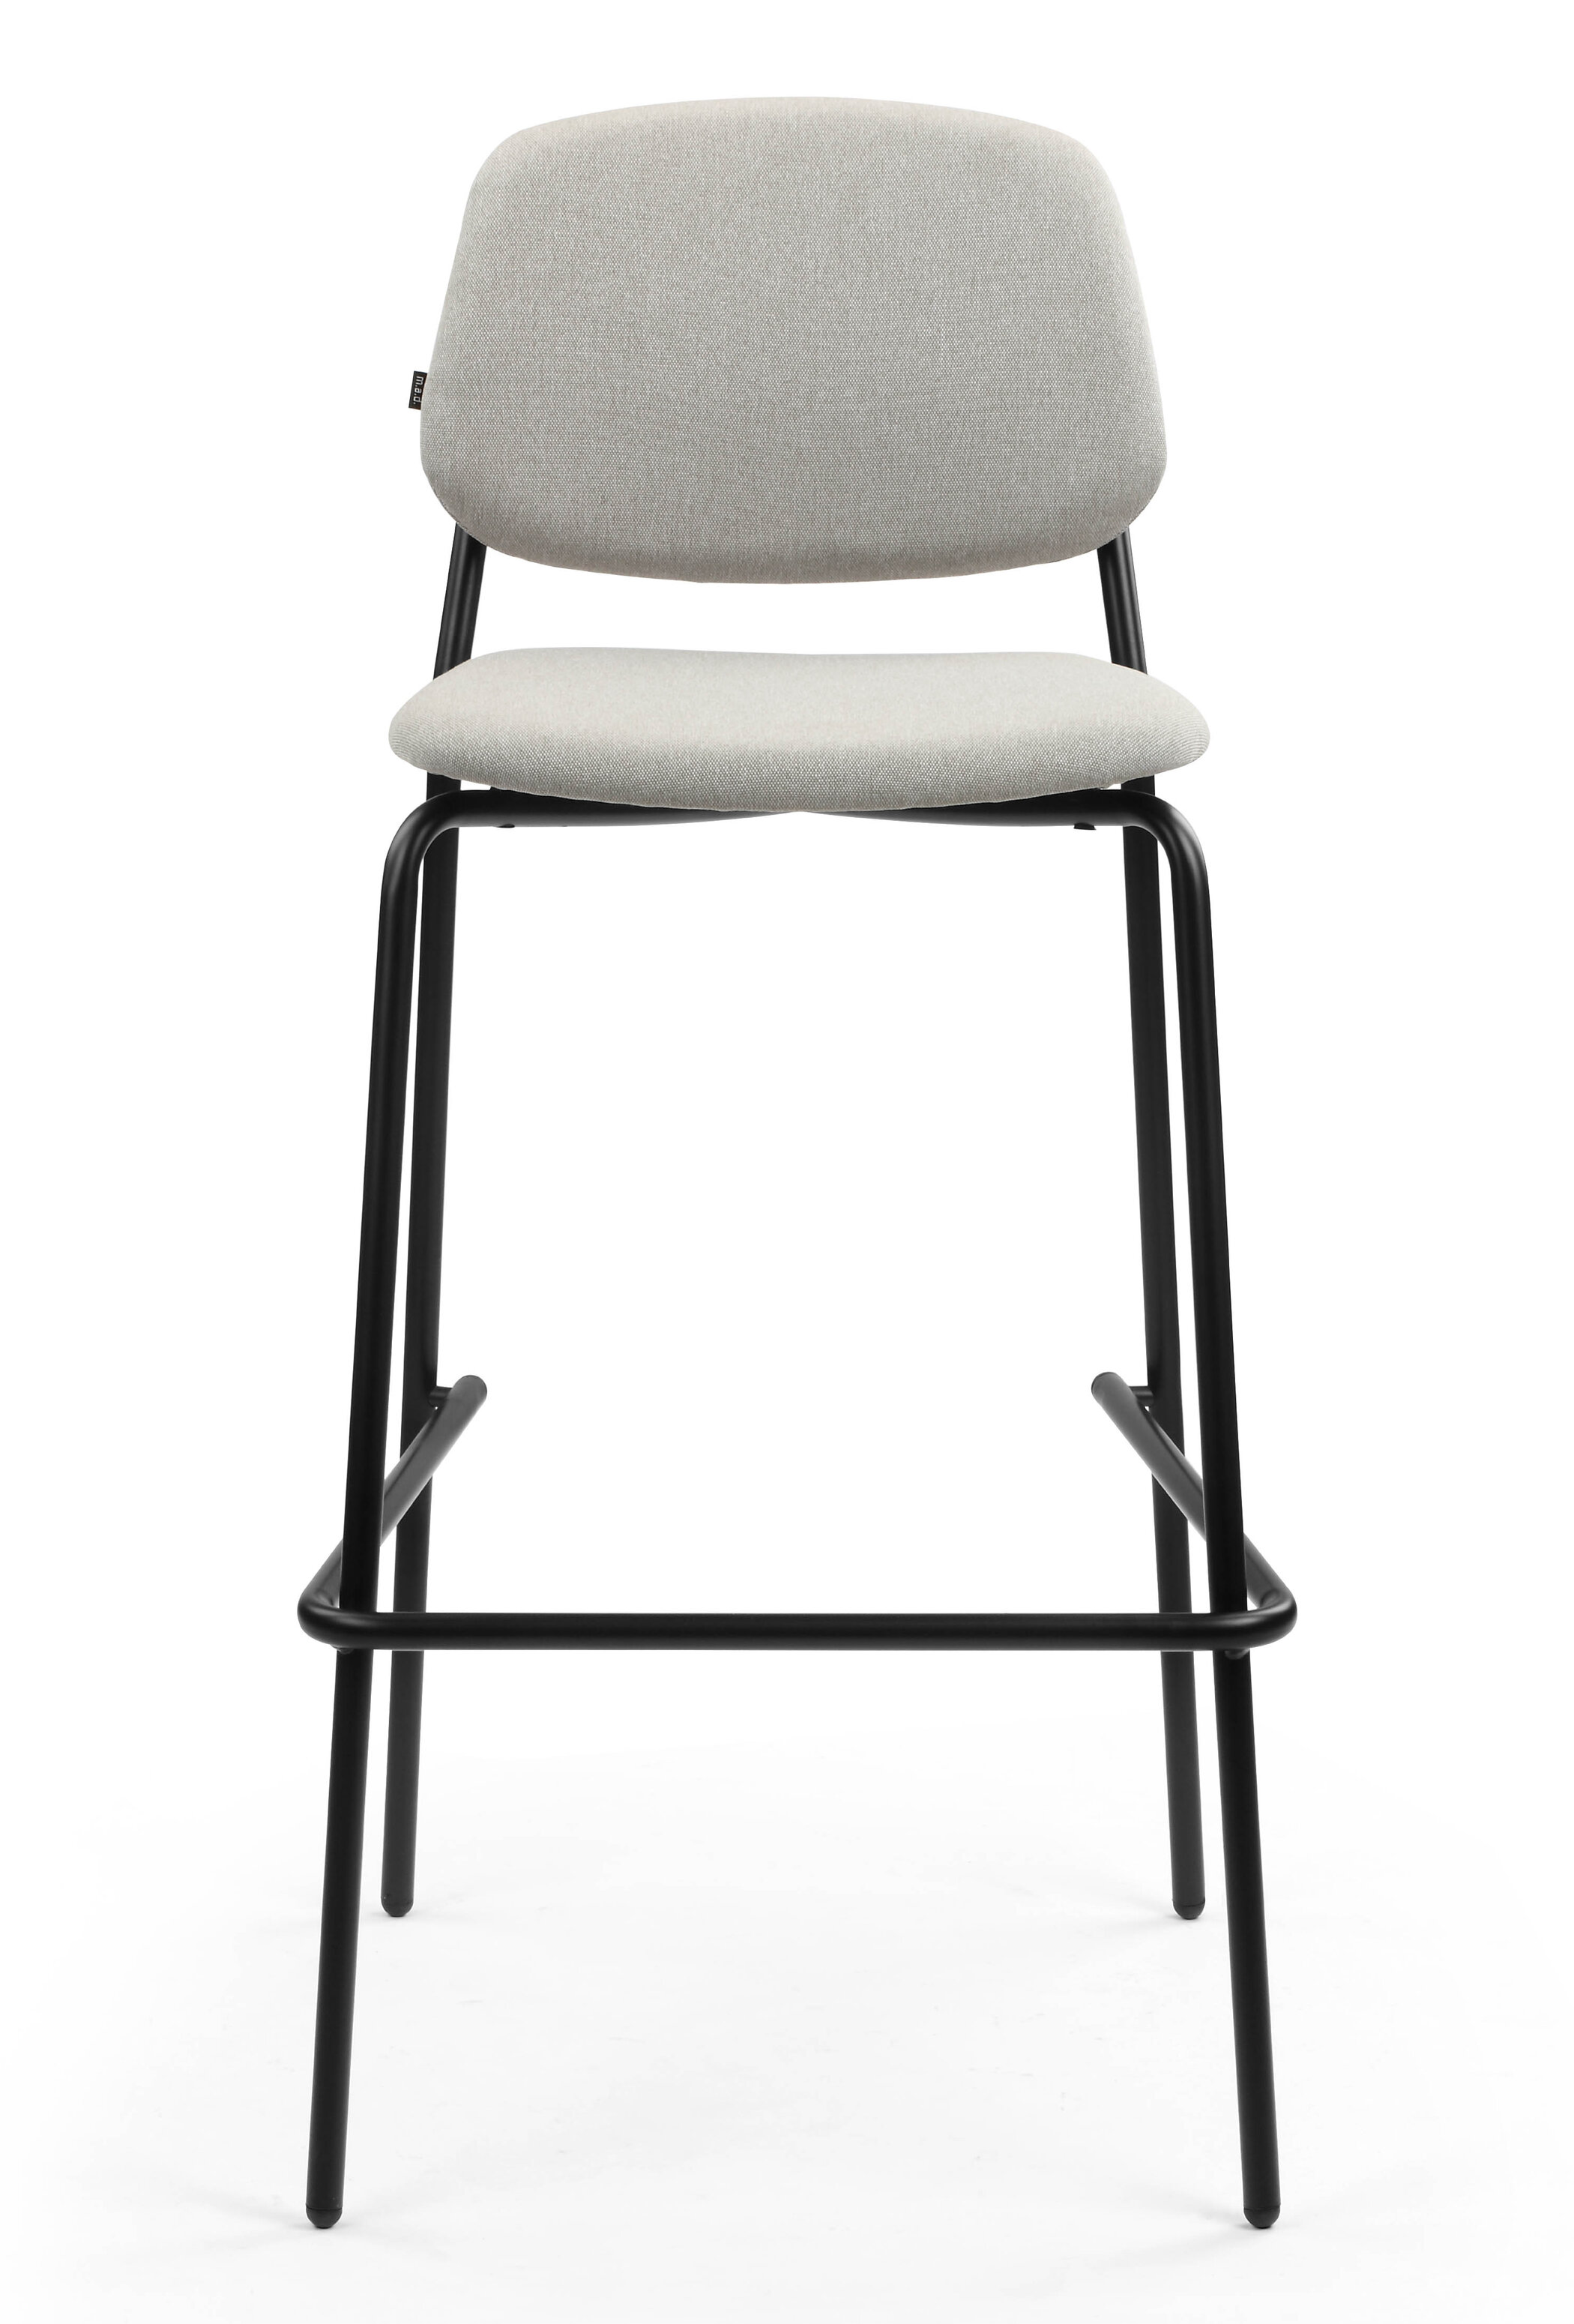 WS - Platform high stool - UPH Grey (Front)